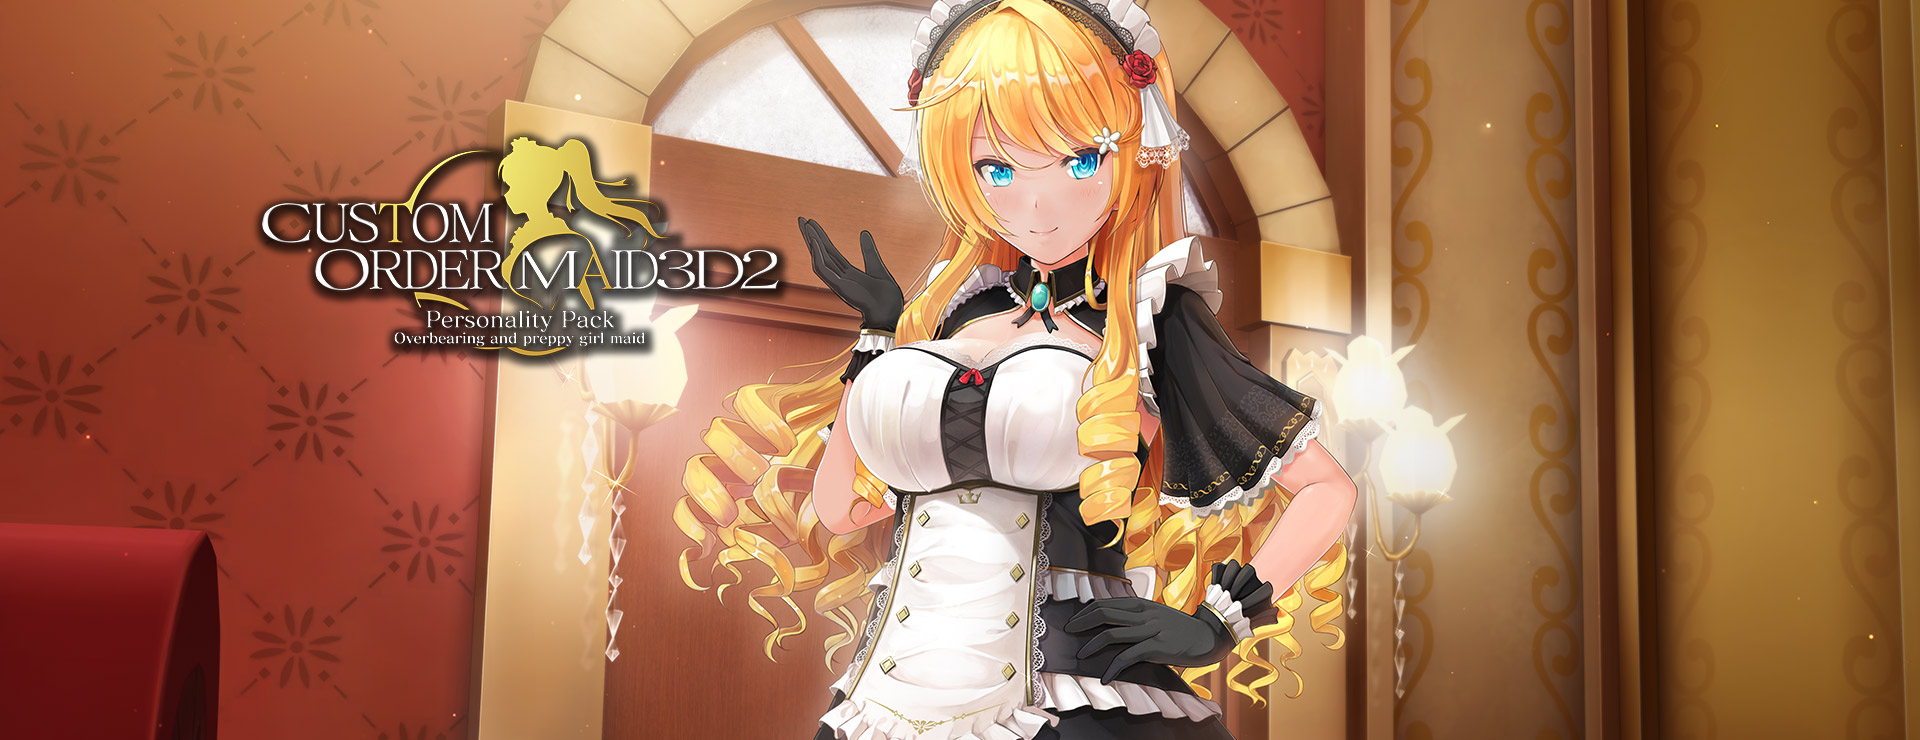 Custom Order Maid 3D 2: Overbearing and Preppy Girl Maid Complete Bundle - シミュレーション ゲーム